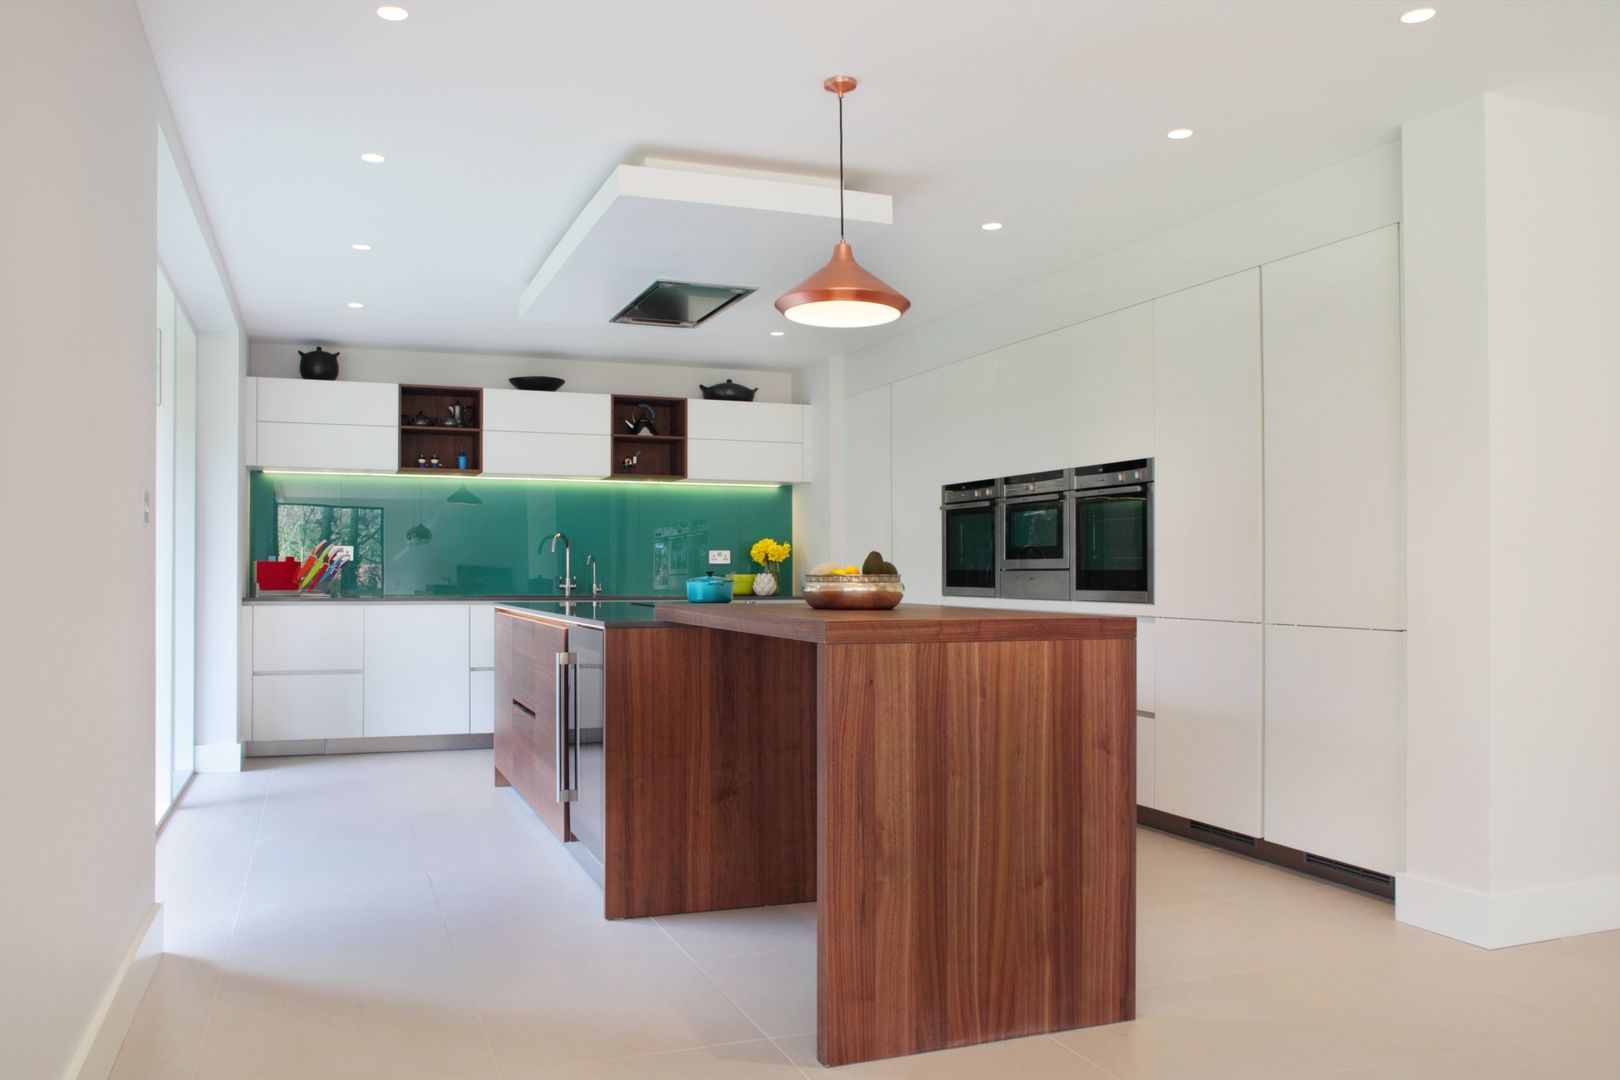 Contemporary Kitchen in Walnut and White Glass in-toto Kitchens Design Studio Marlow Nowoczesna kuchnia